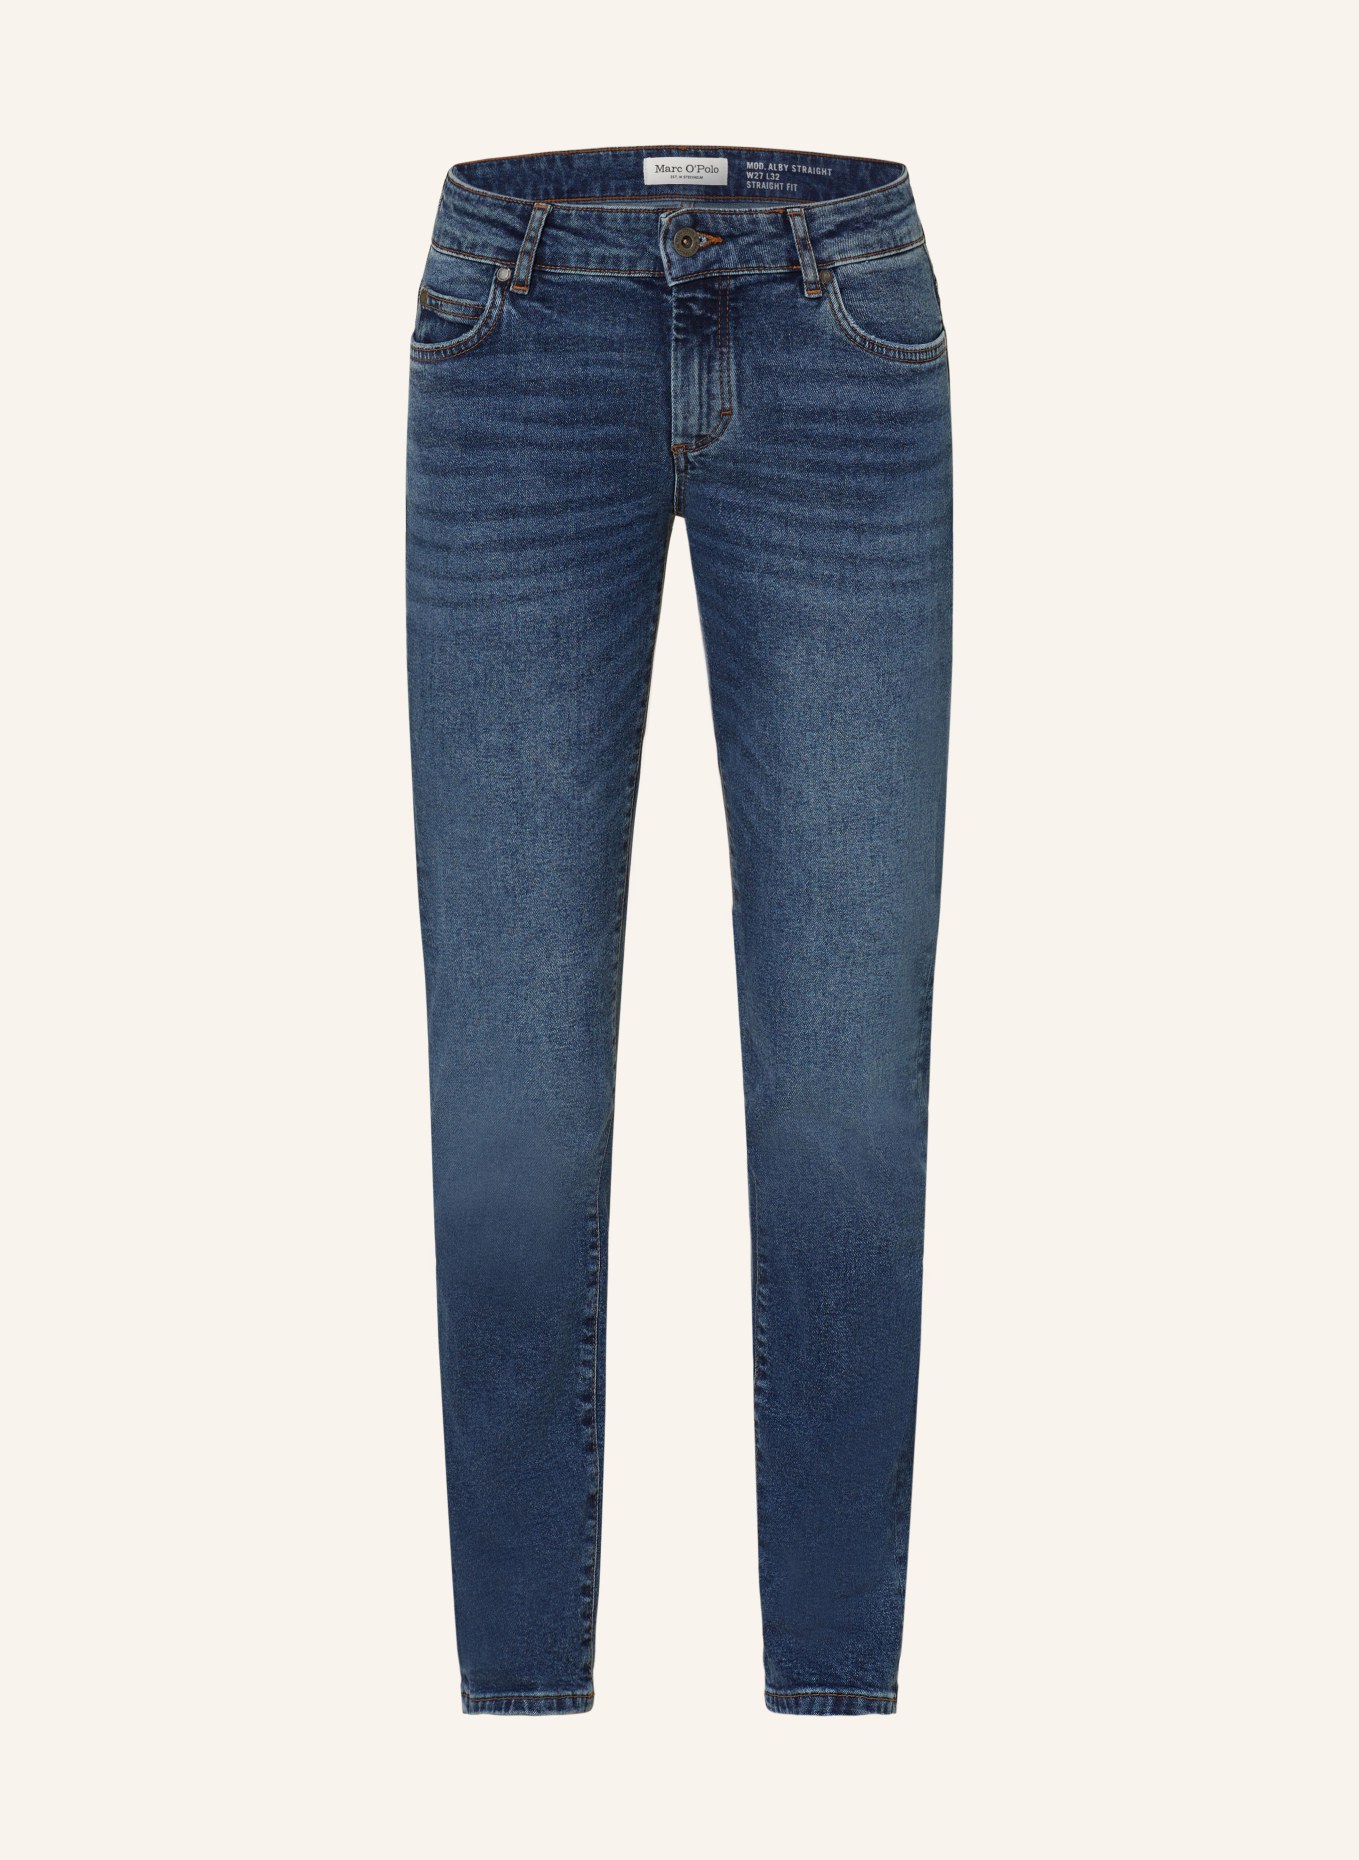 Marc O'Polo Straight Jeans, Farbe: 075 Authentic mid blue wash (Bild 1)